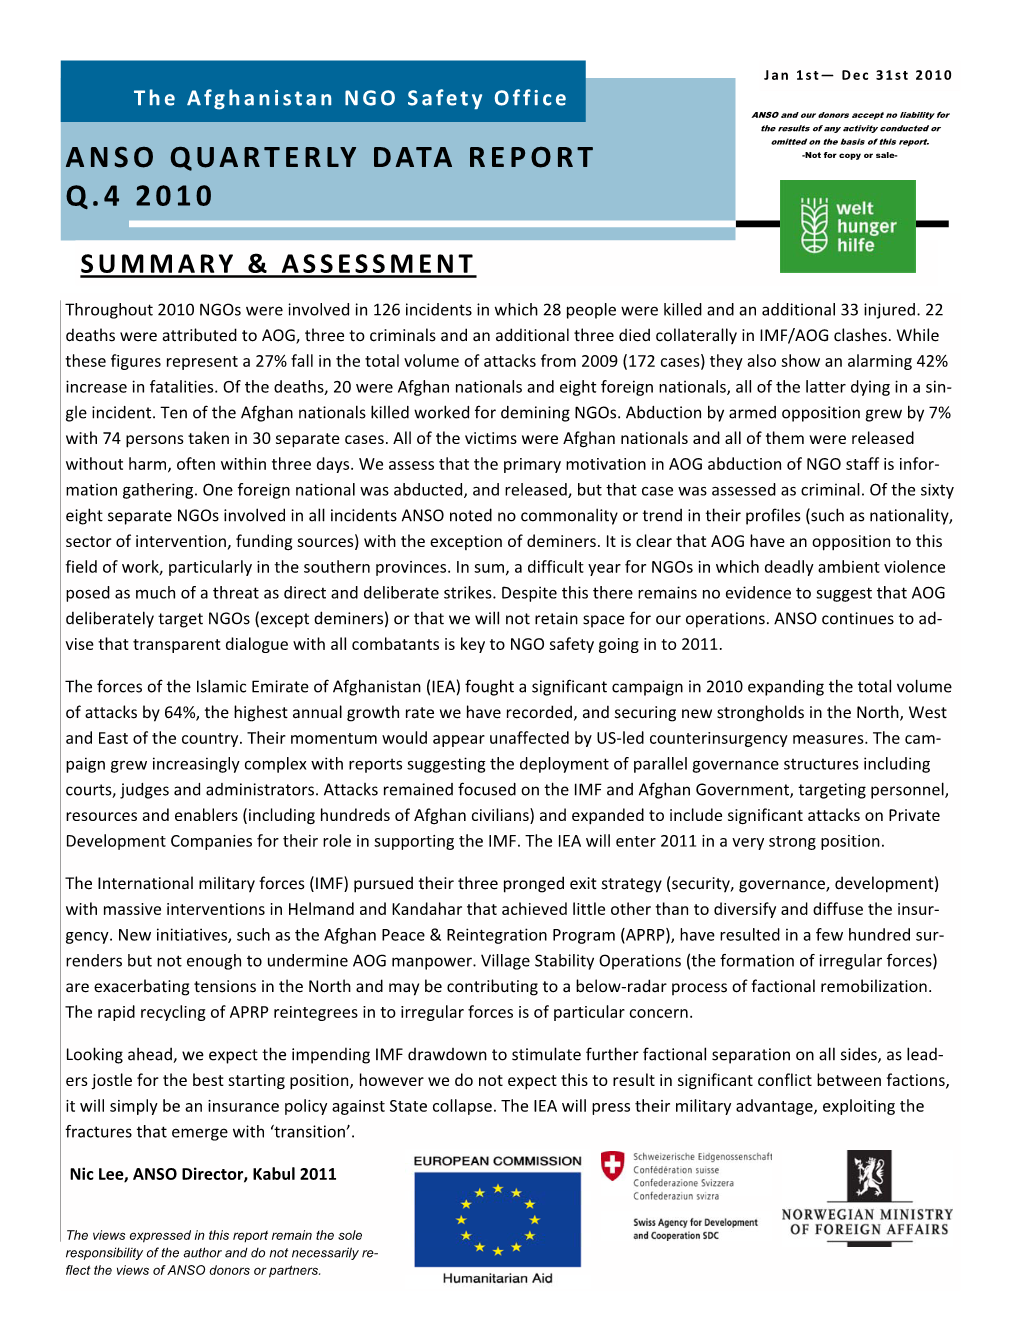 ANSO Quarterly Data Report (Q.4 2010)